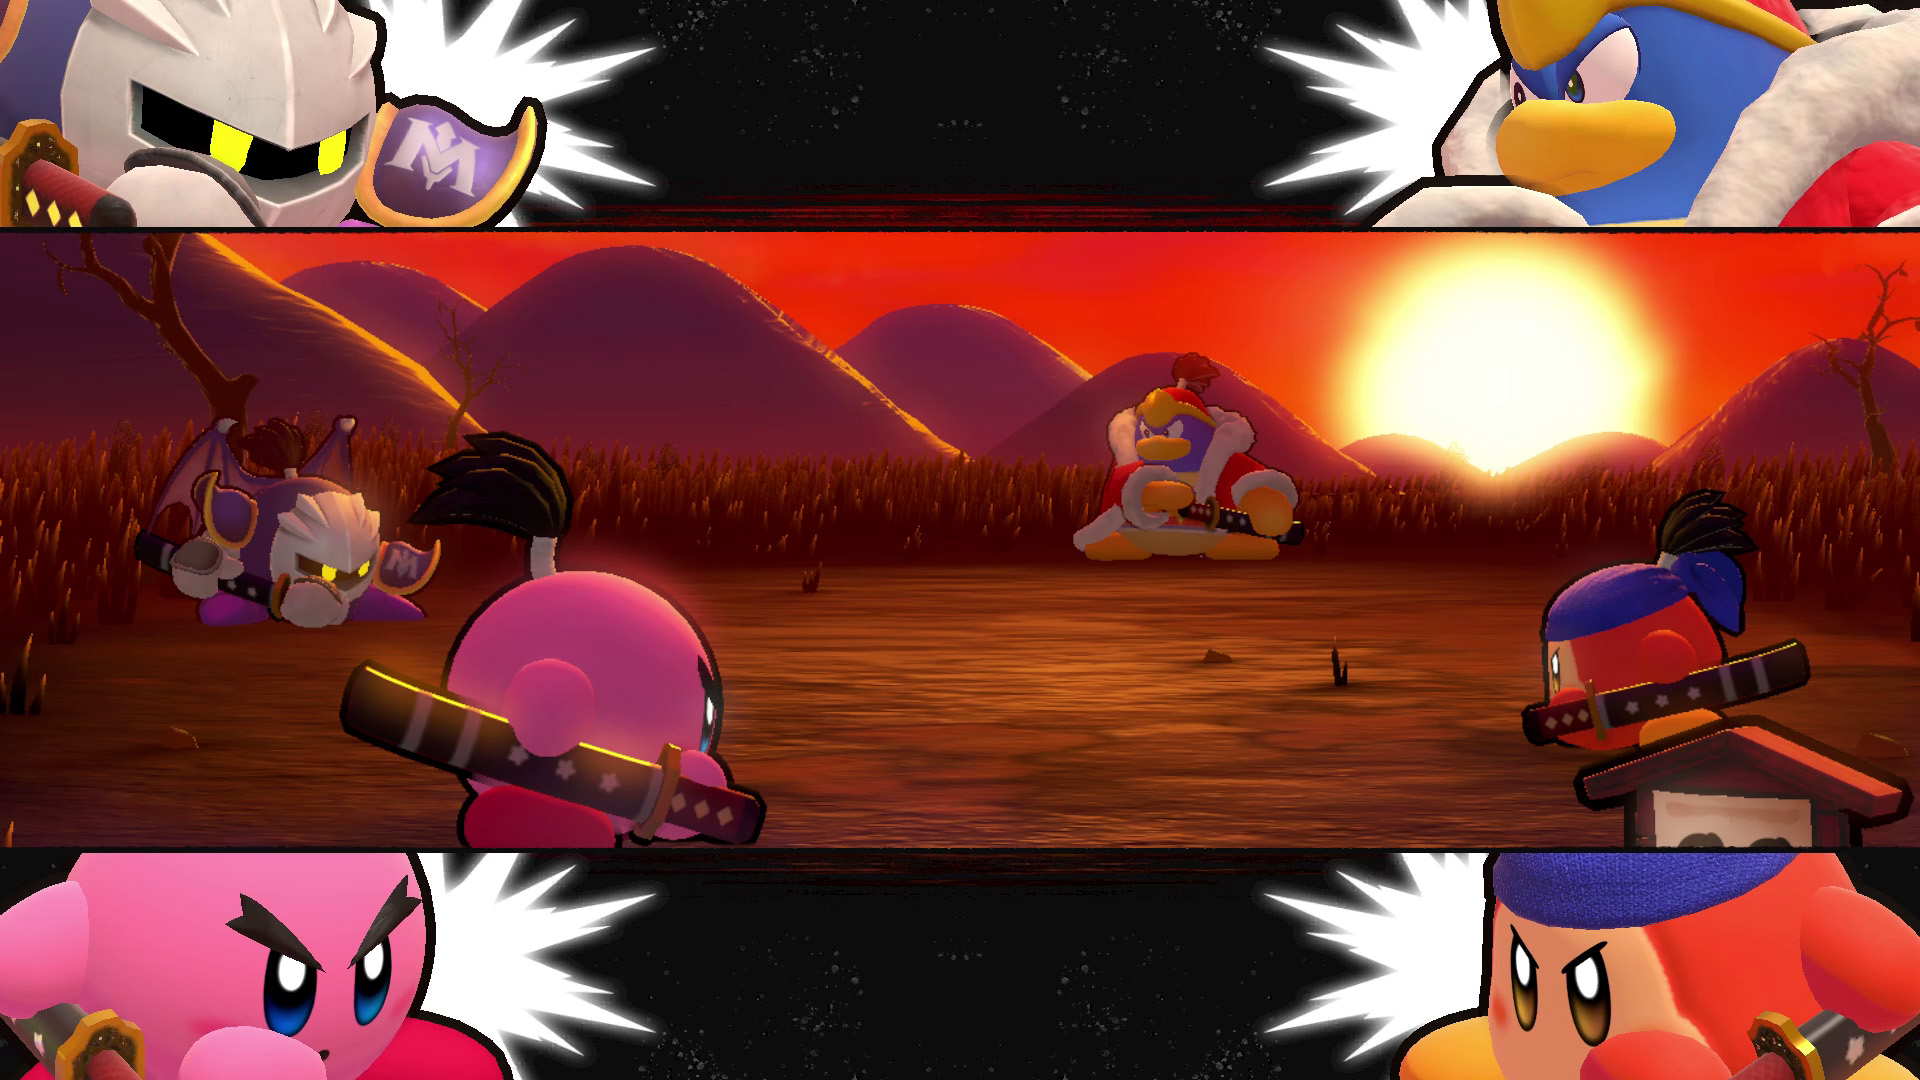 Kirby's Dream Land 2 DX - Full Game - No Damage 100% Walkthrough 